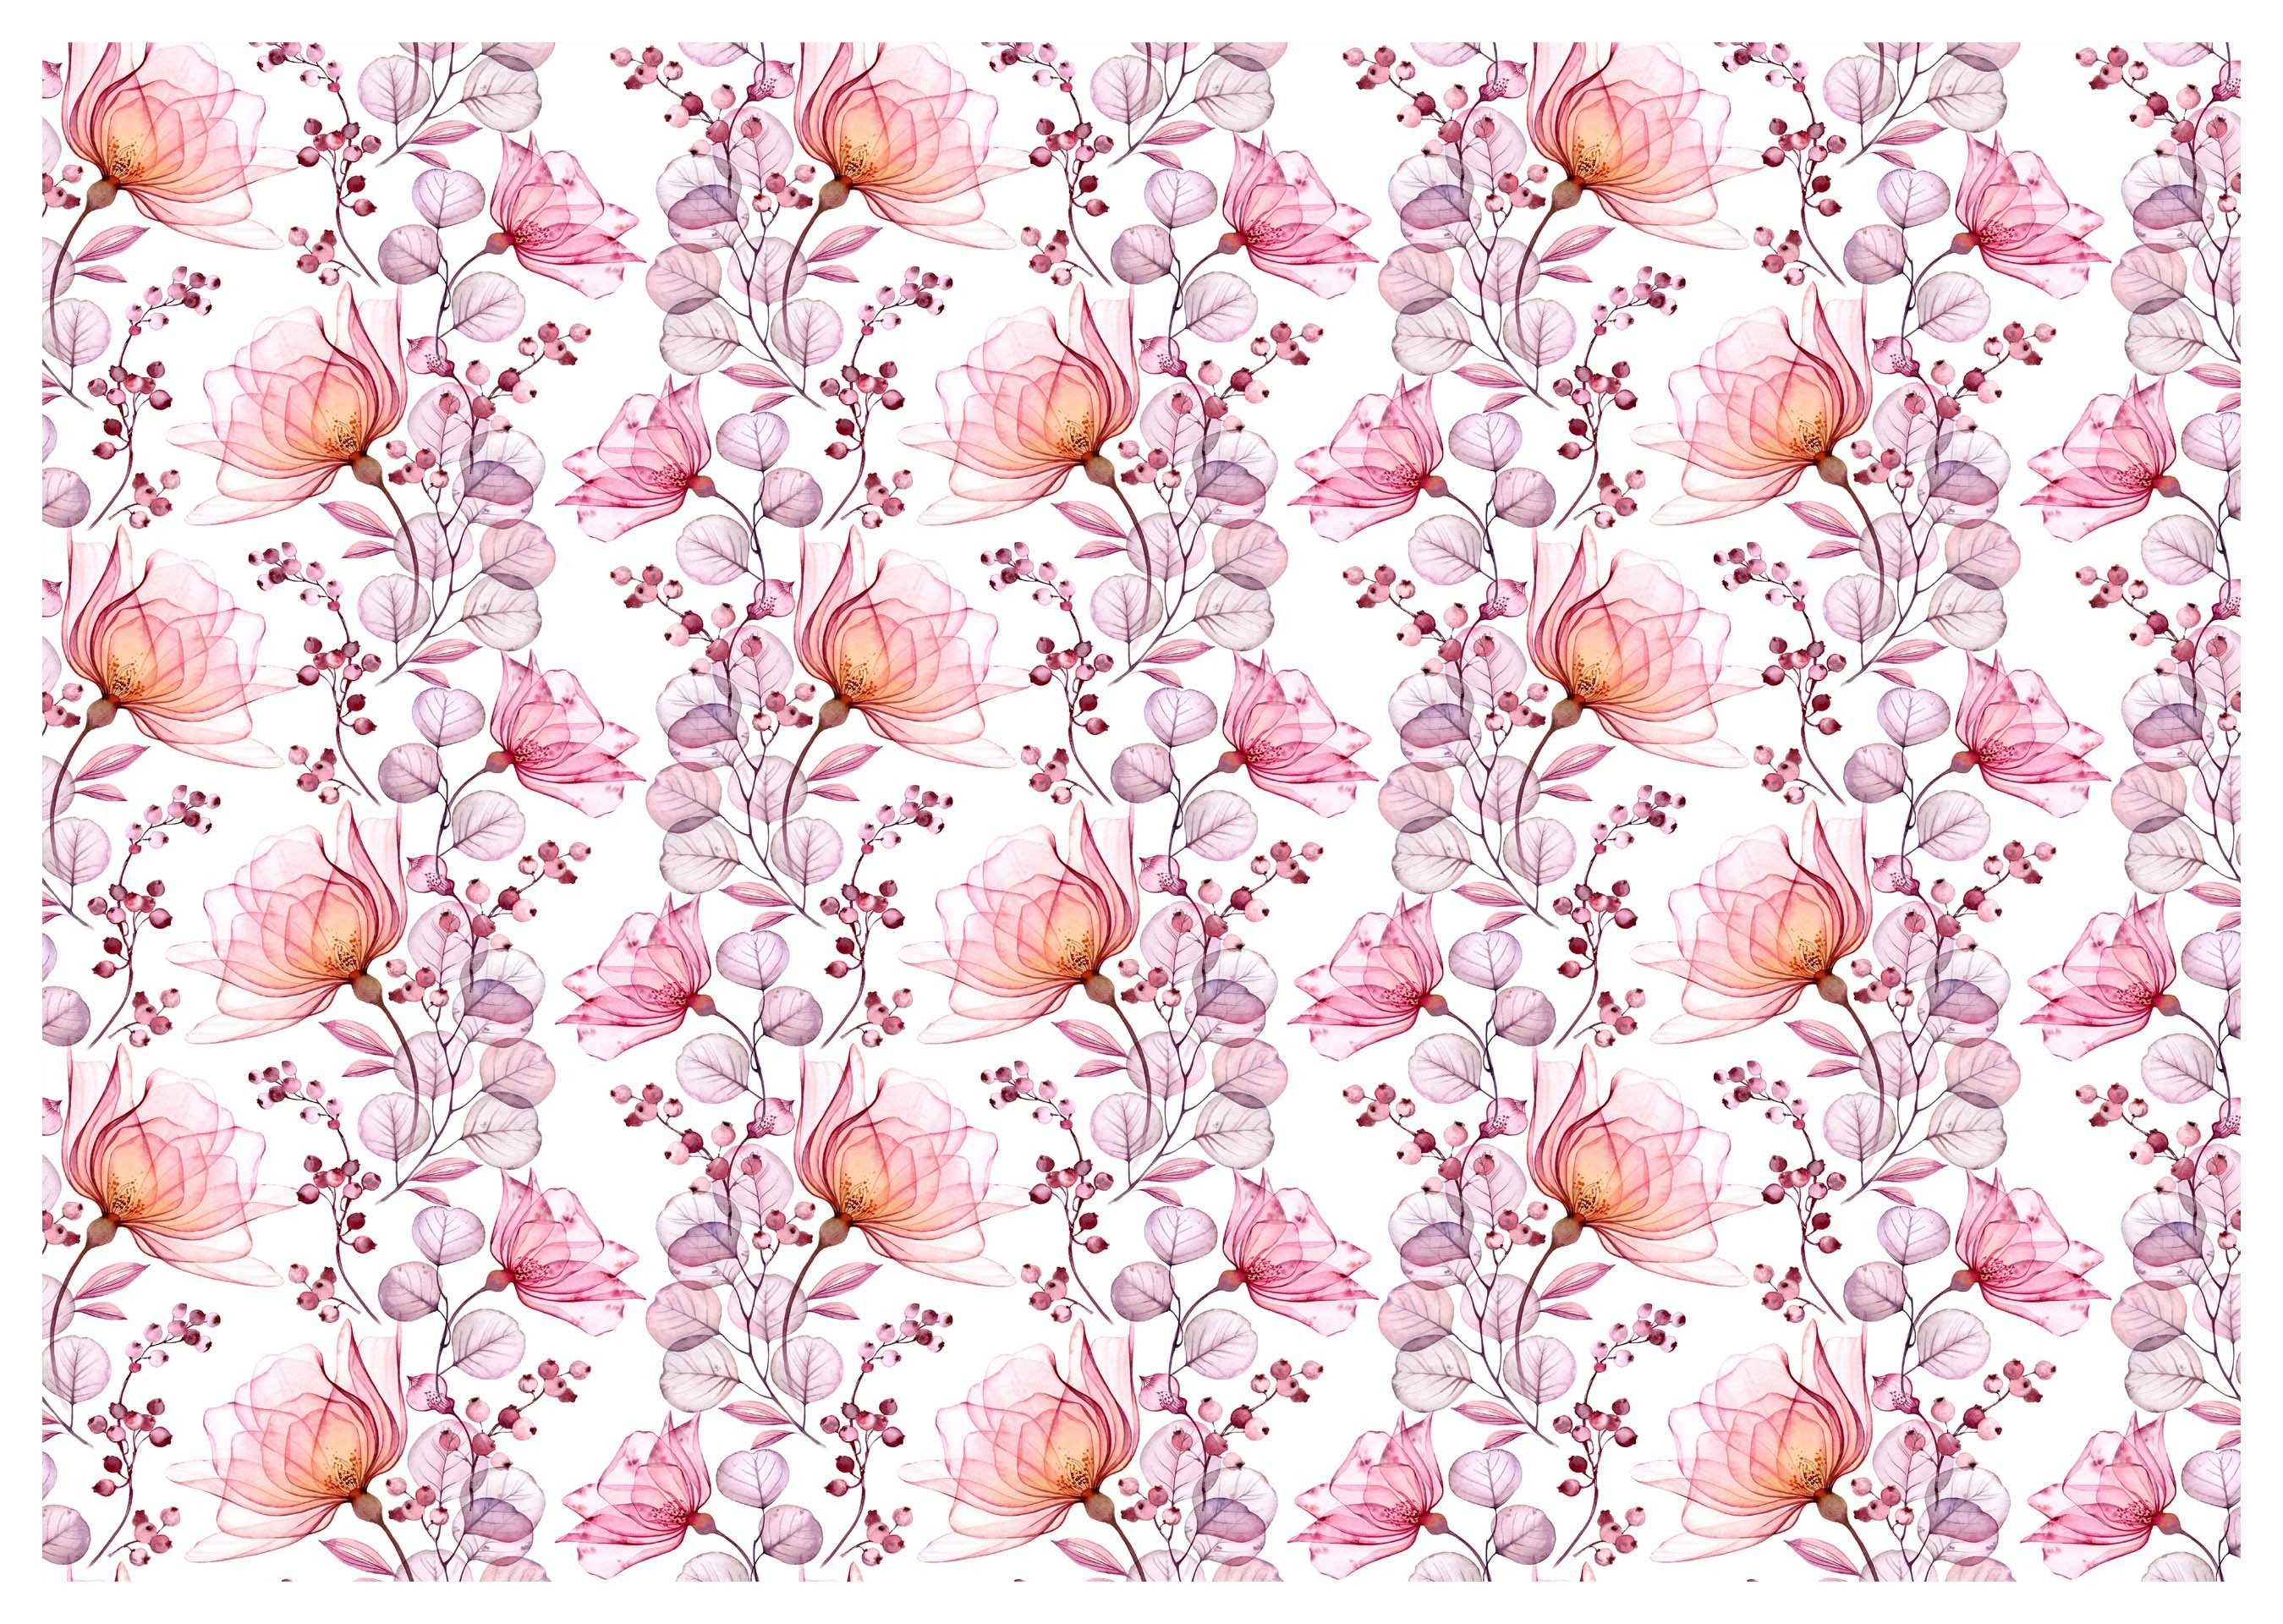 wandmotiv24 Fototapete Blüten Malerei Blätter Natur, glatt, Wandtapete, Motivtapete, matt, Vliestapete